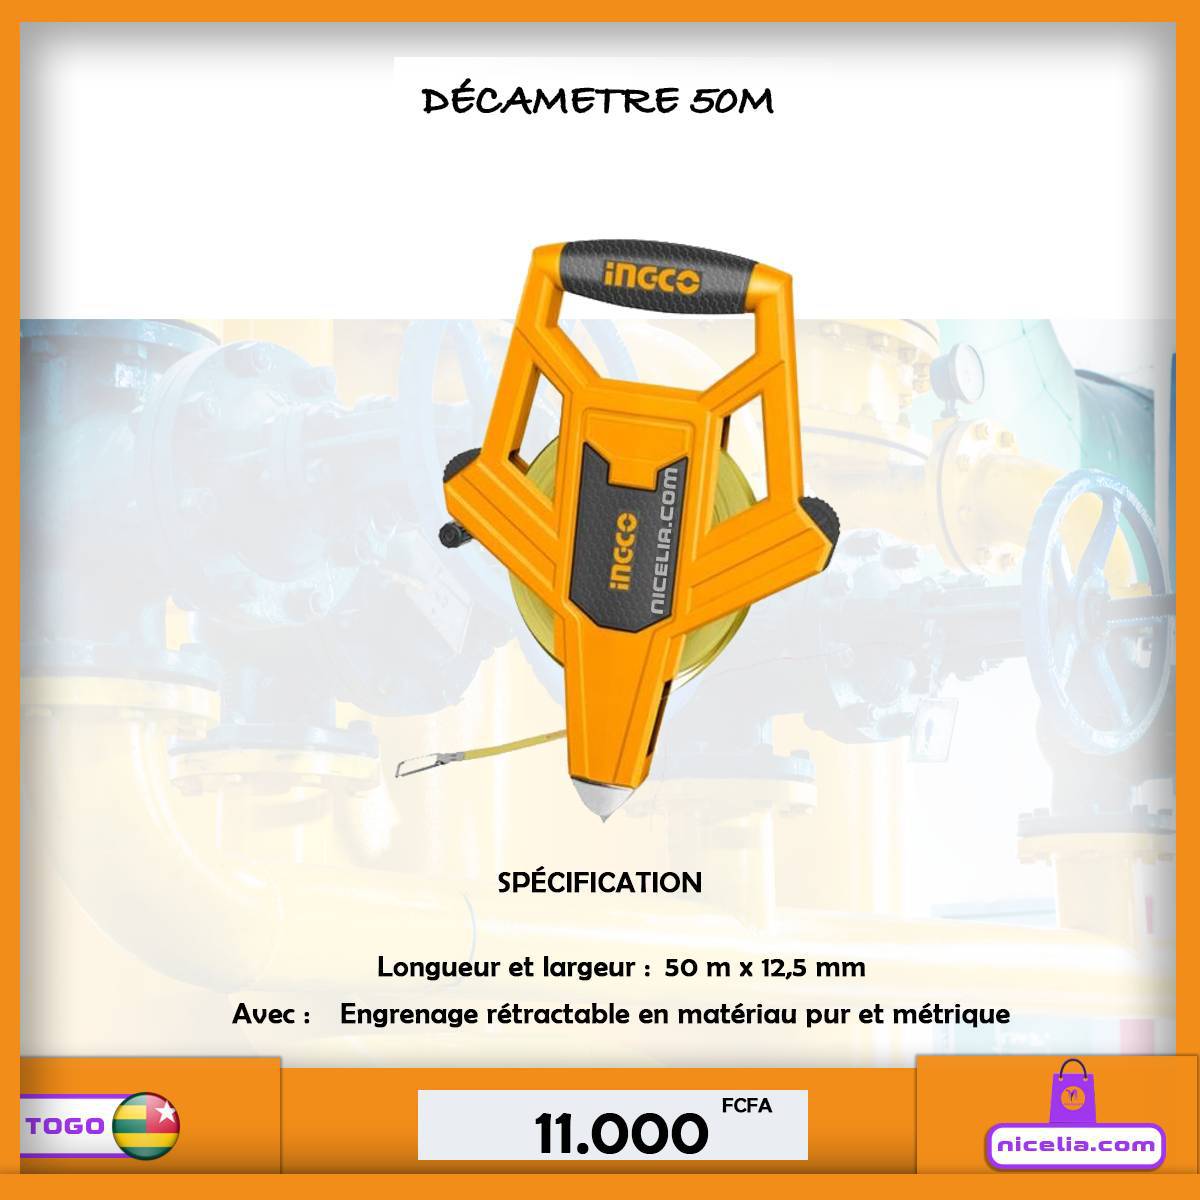 Produit DECA50 - Décamètre - 50 m - Tremblay SA